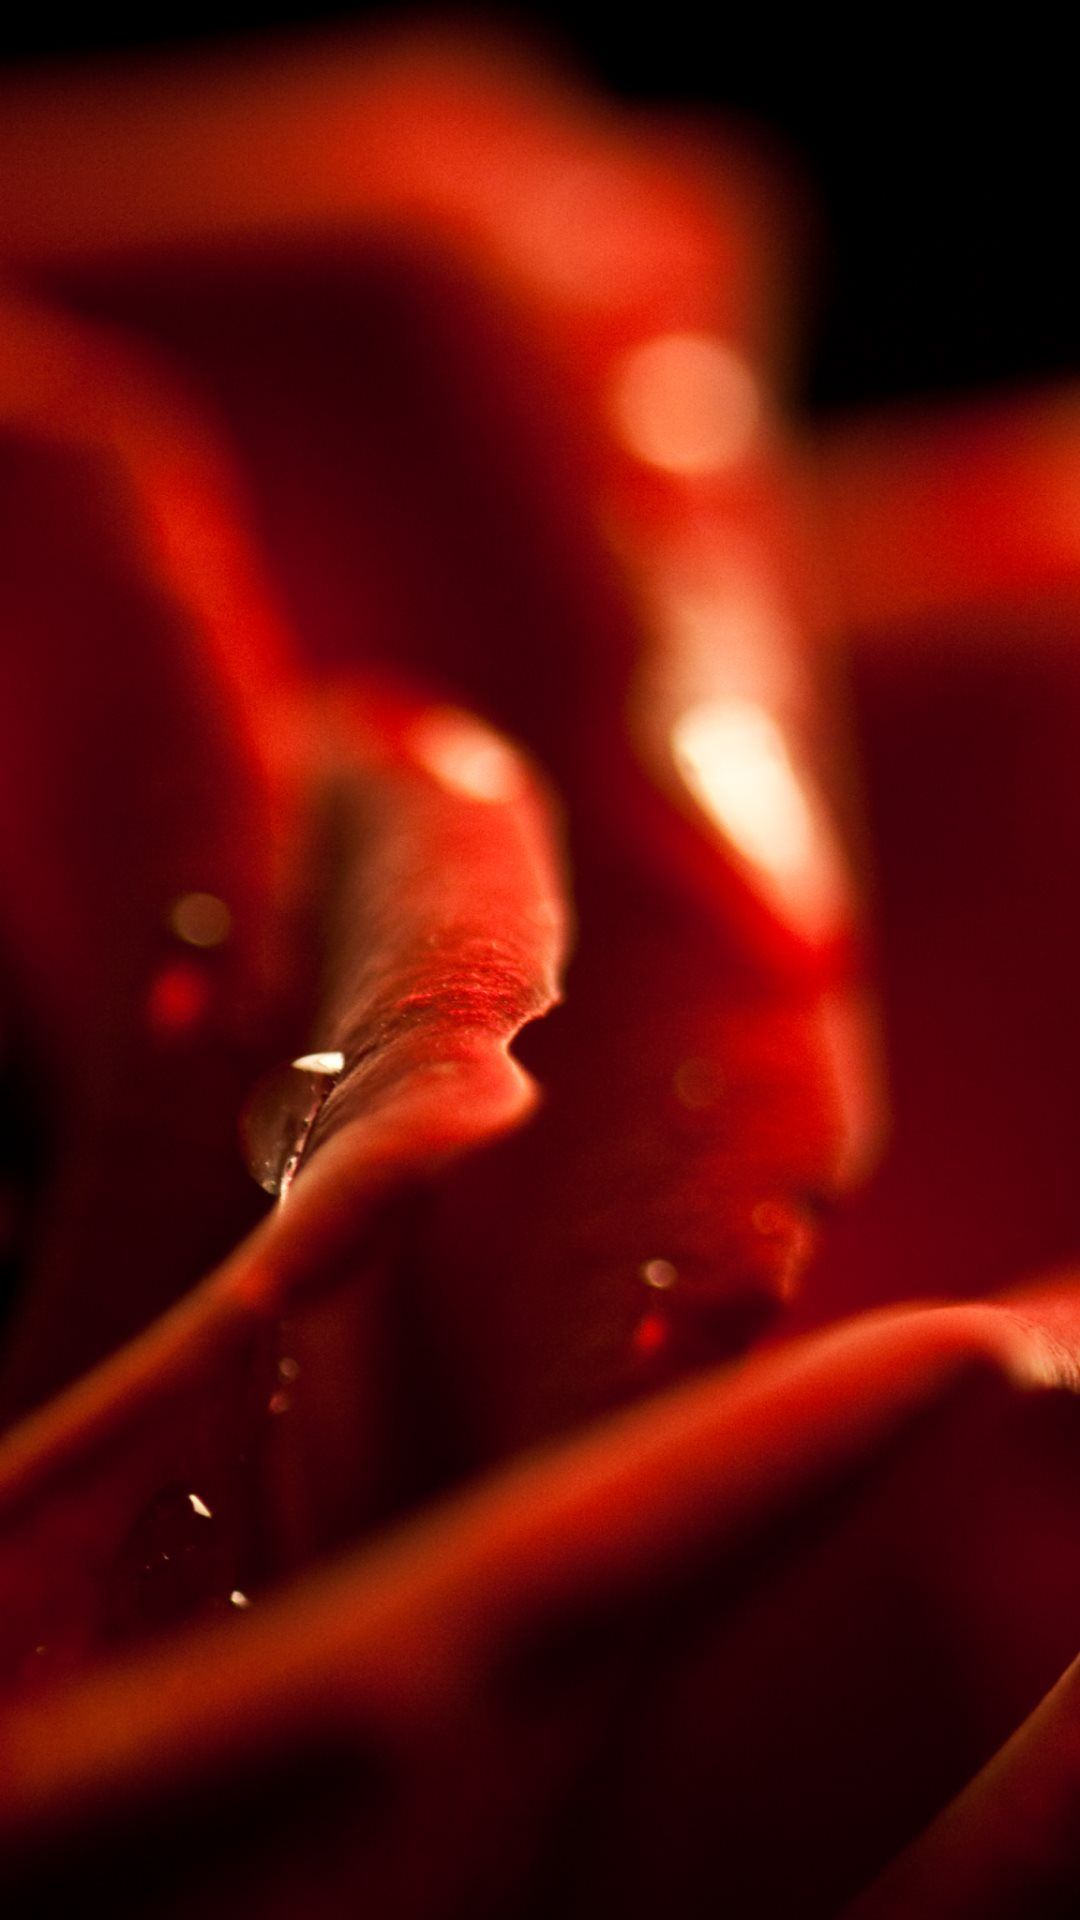 Red+rose+Valentine%27s+day_1080x1920.jpg